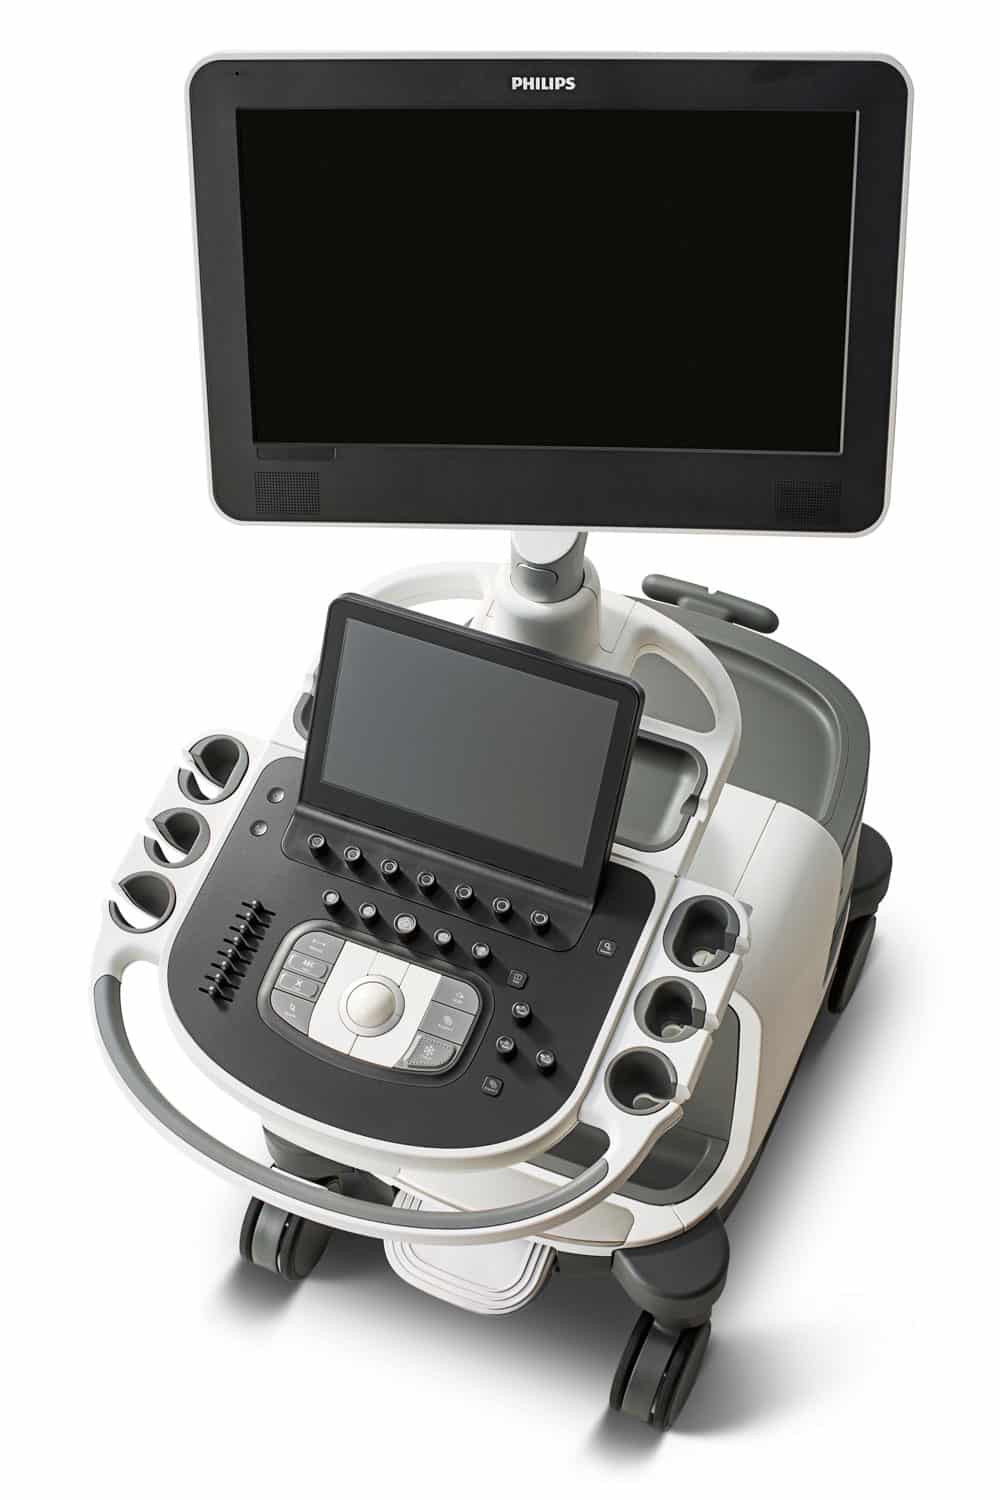 Philips Affiniti cvx ultrasound machine on a cart